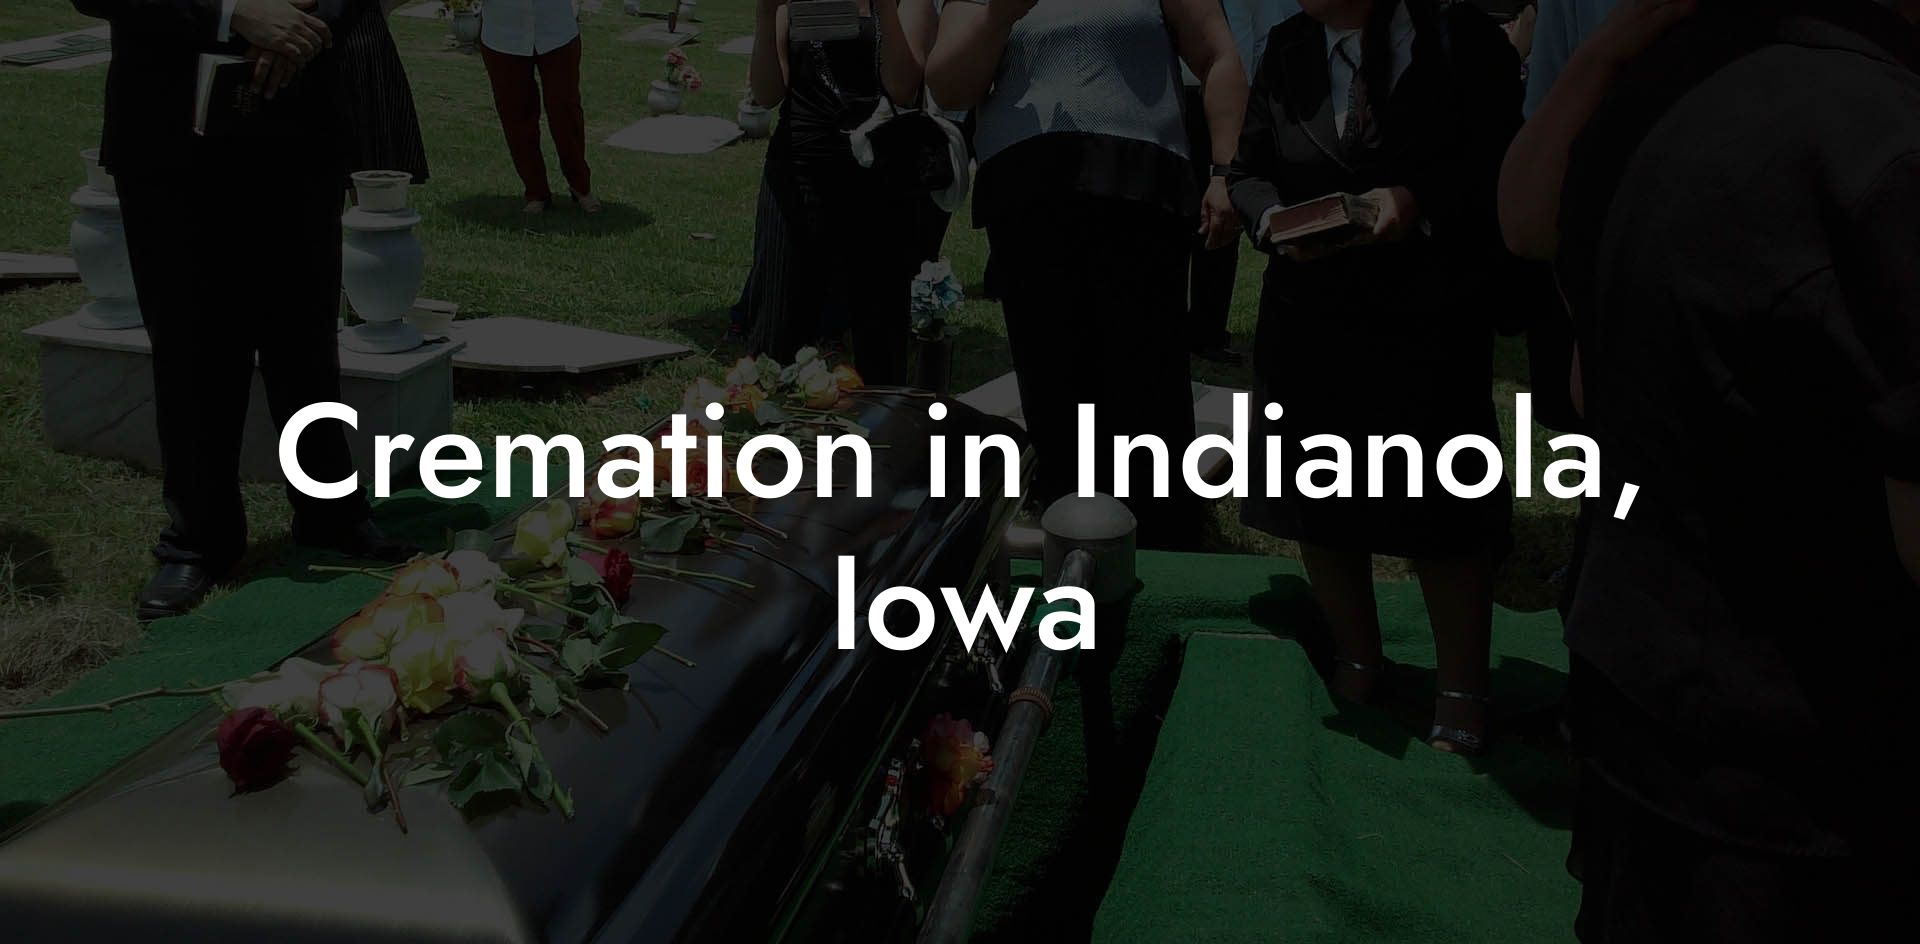 Cremation in Indianola, Iowa